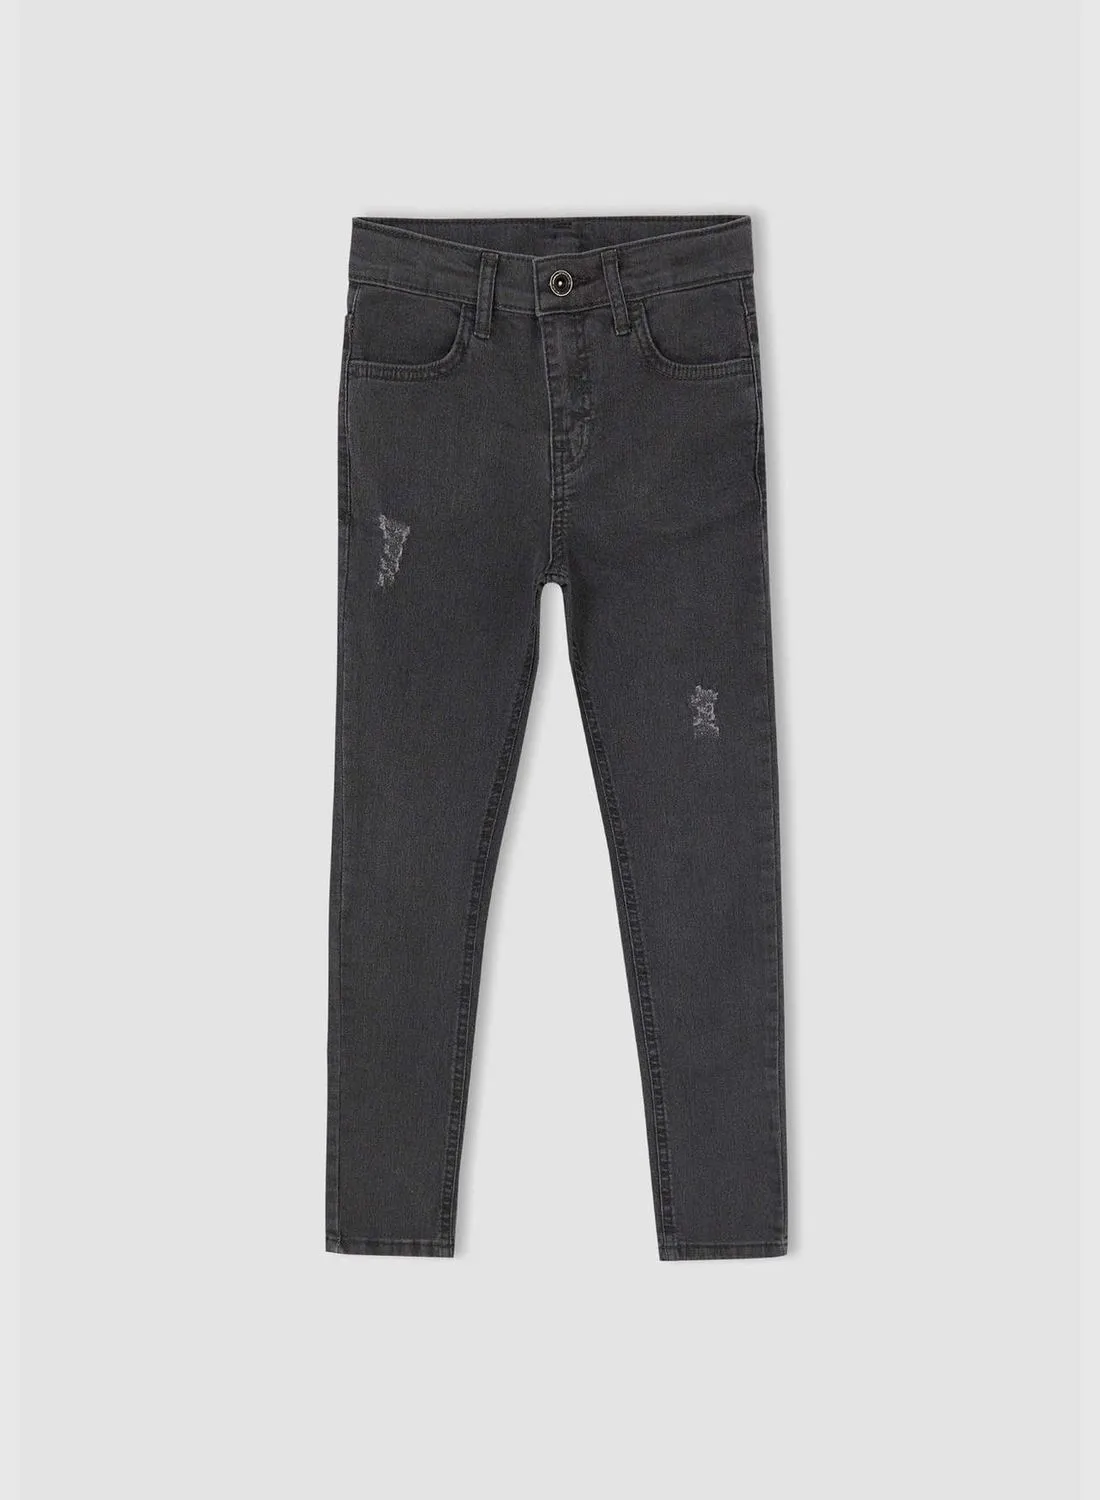 DeFacto Slim Fit Distressed Denim Jeans